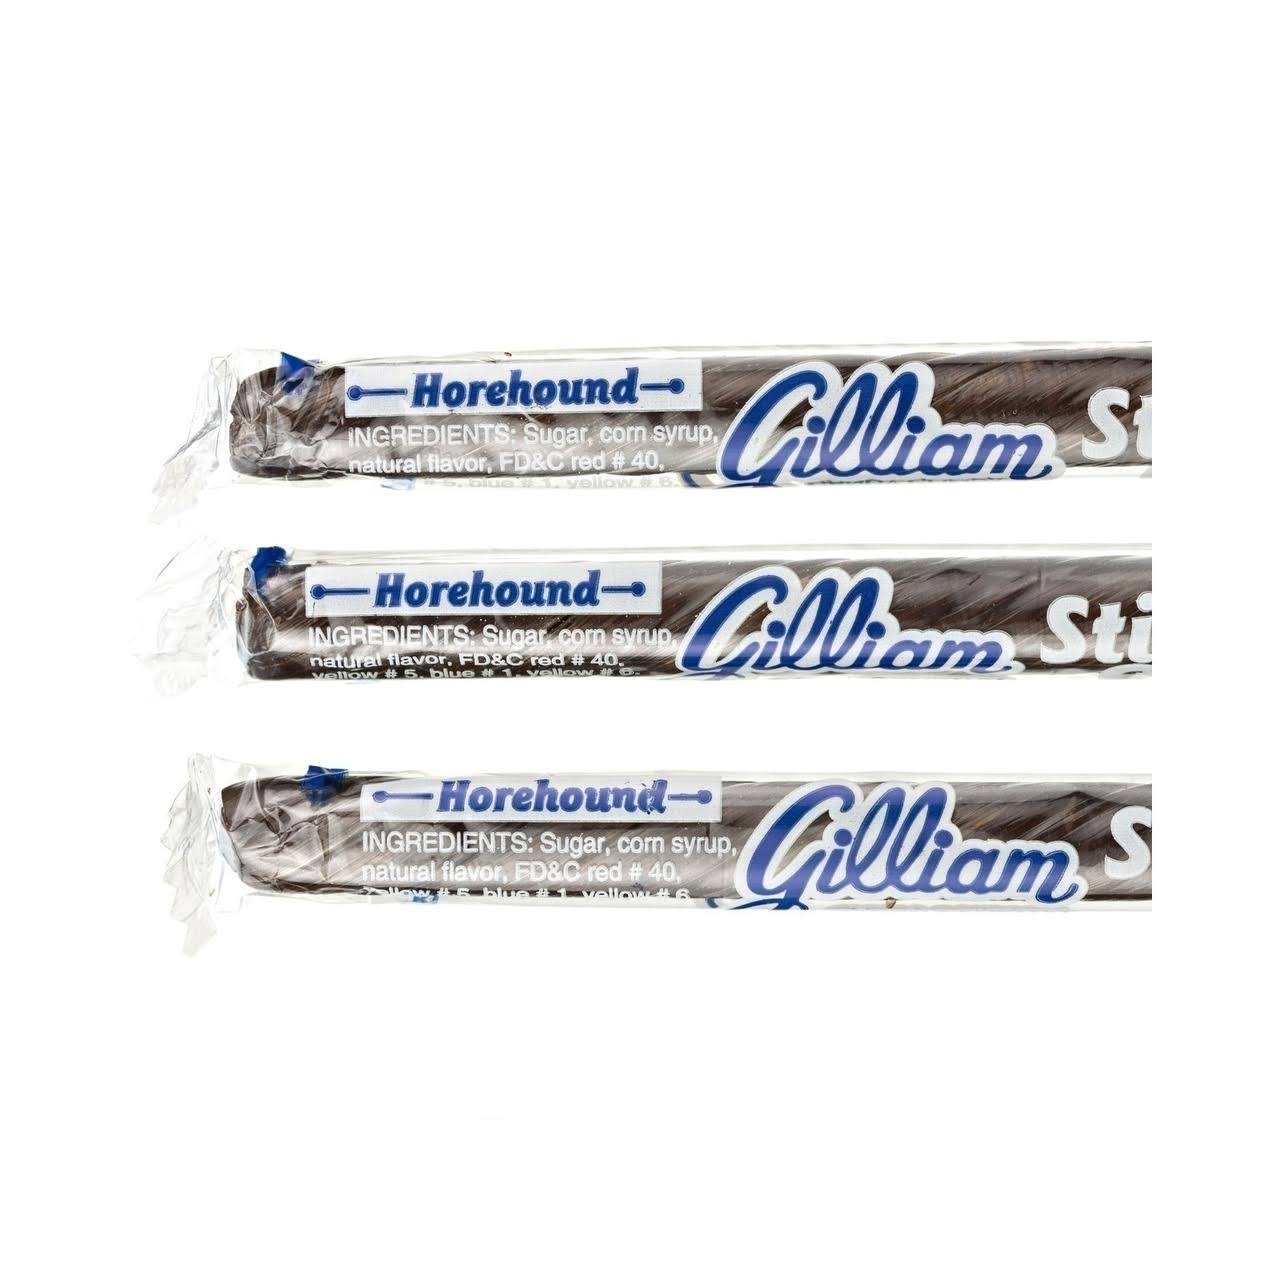 Gillian Quality Horehound Stick Candy, 0.5oz, 80pk